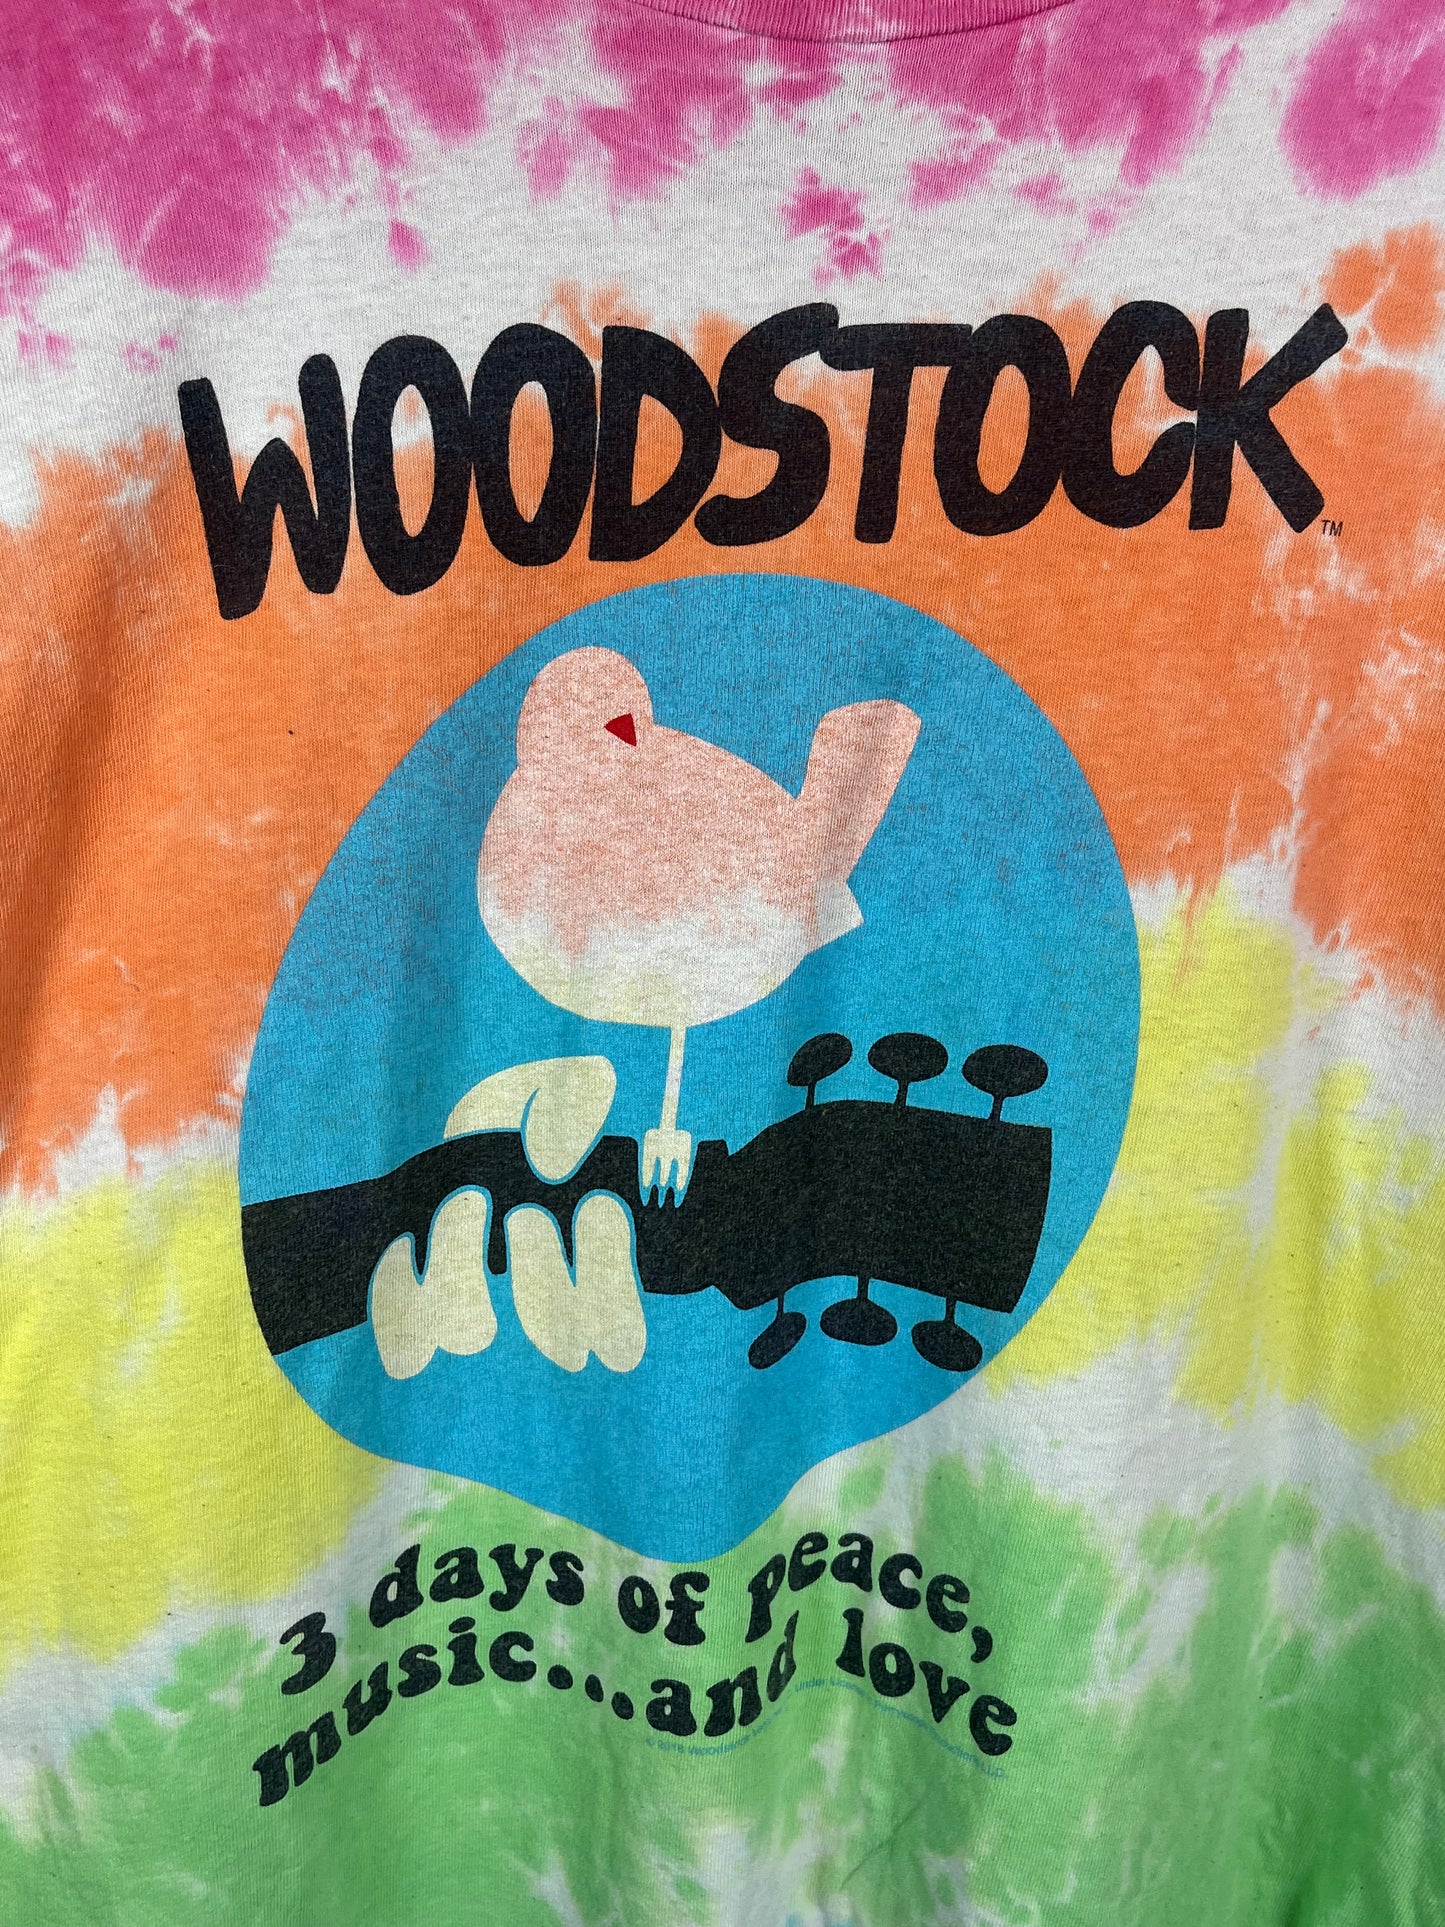 (XXL) Woodstock Liquid Blue Tie-Dye Tee